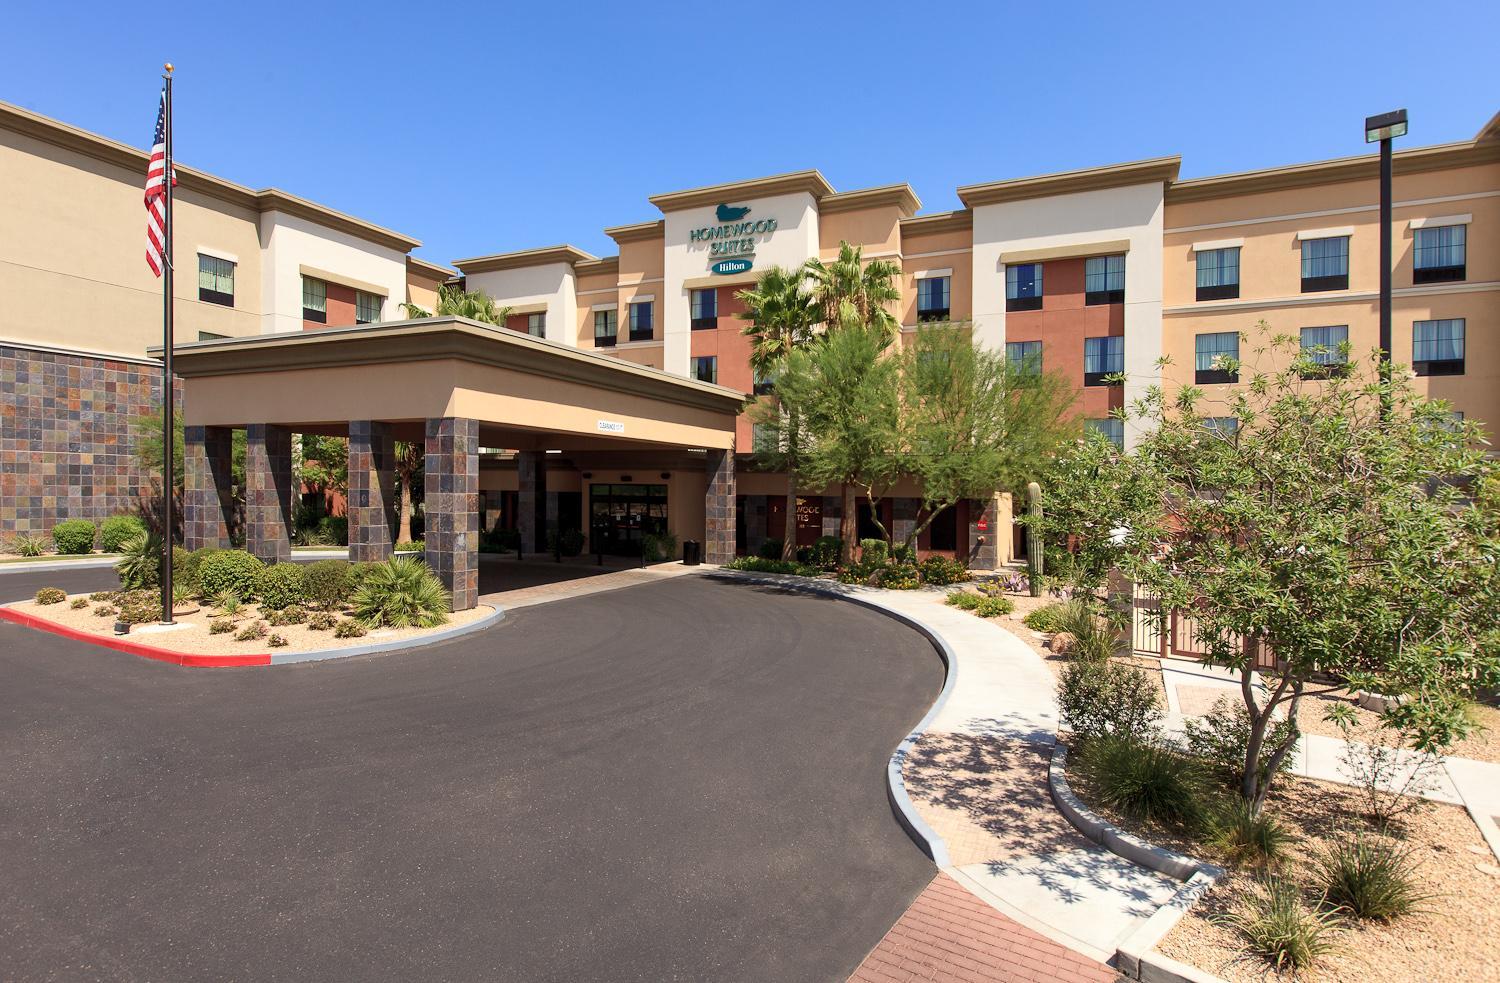 Photo of Homewood Suites by Hilton Phoenix North-Happy Valley, Phoenix, AZ